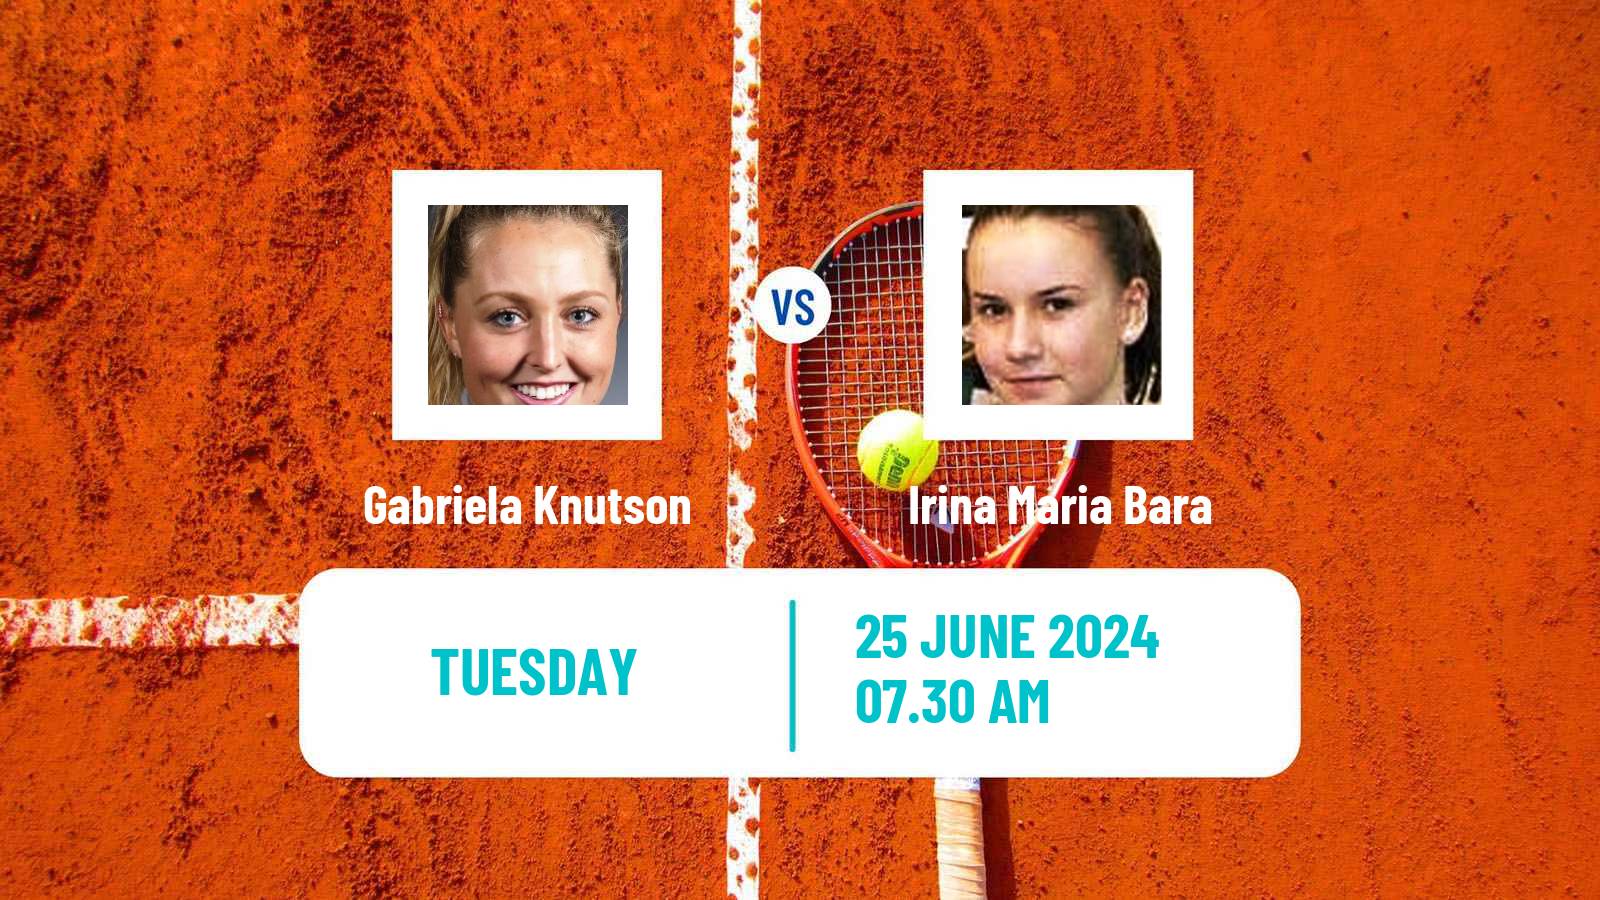 Tennis WTA Wimbledon Gabriela Knutson - Irina Maria Bara